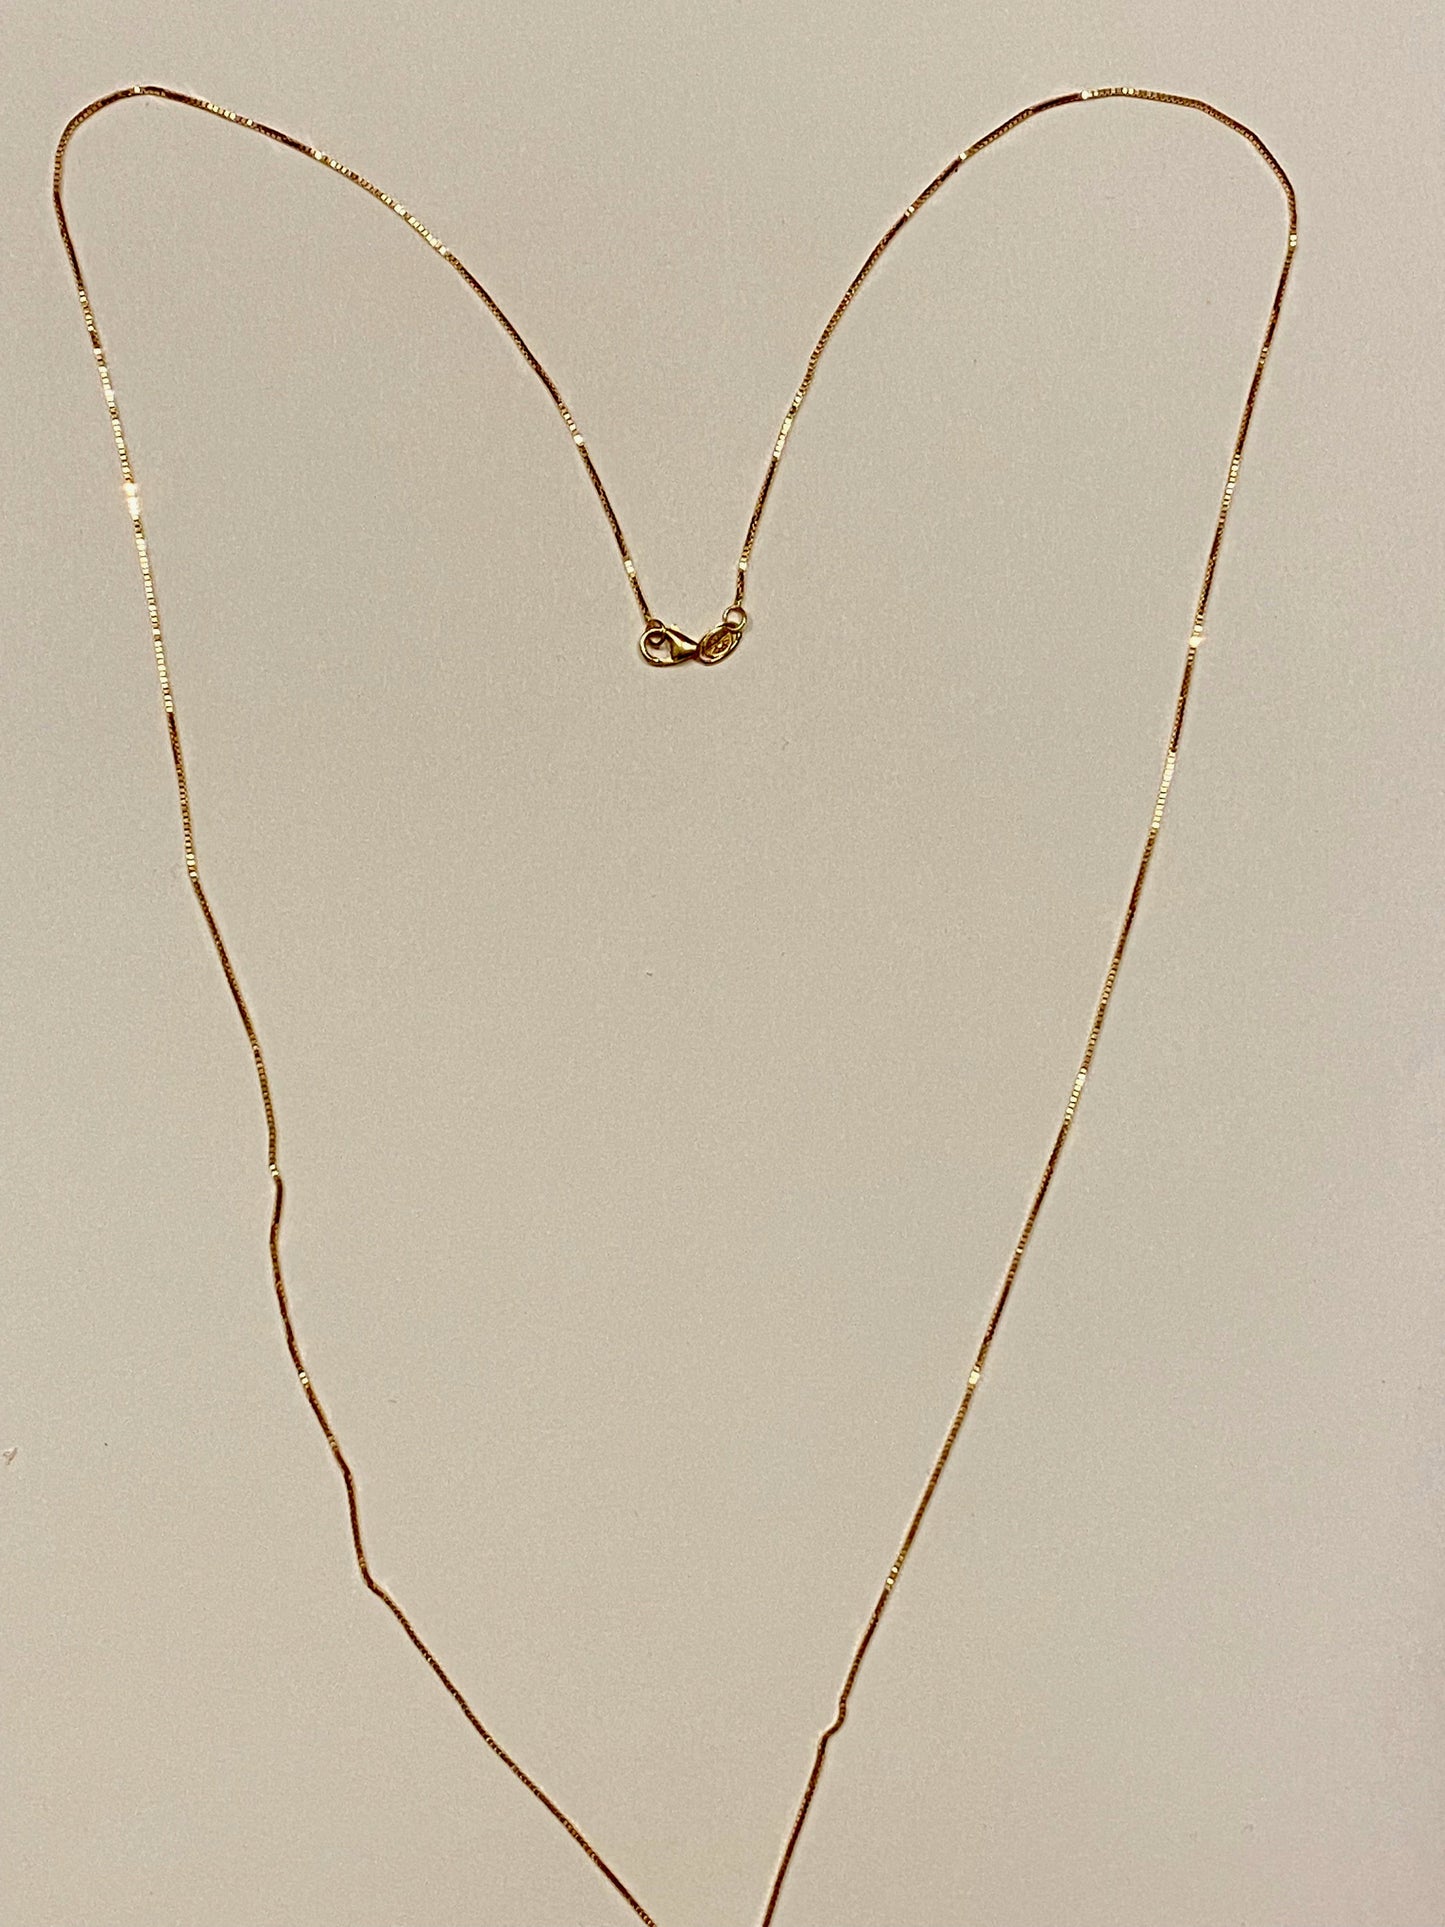 14k Yellow Gold 30" Box Chain Necklace - Elegant in design